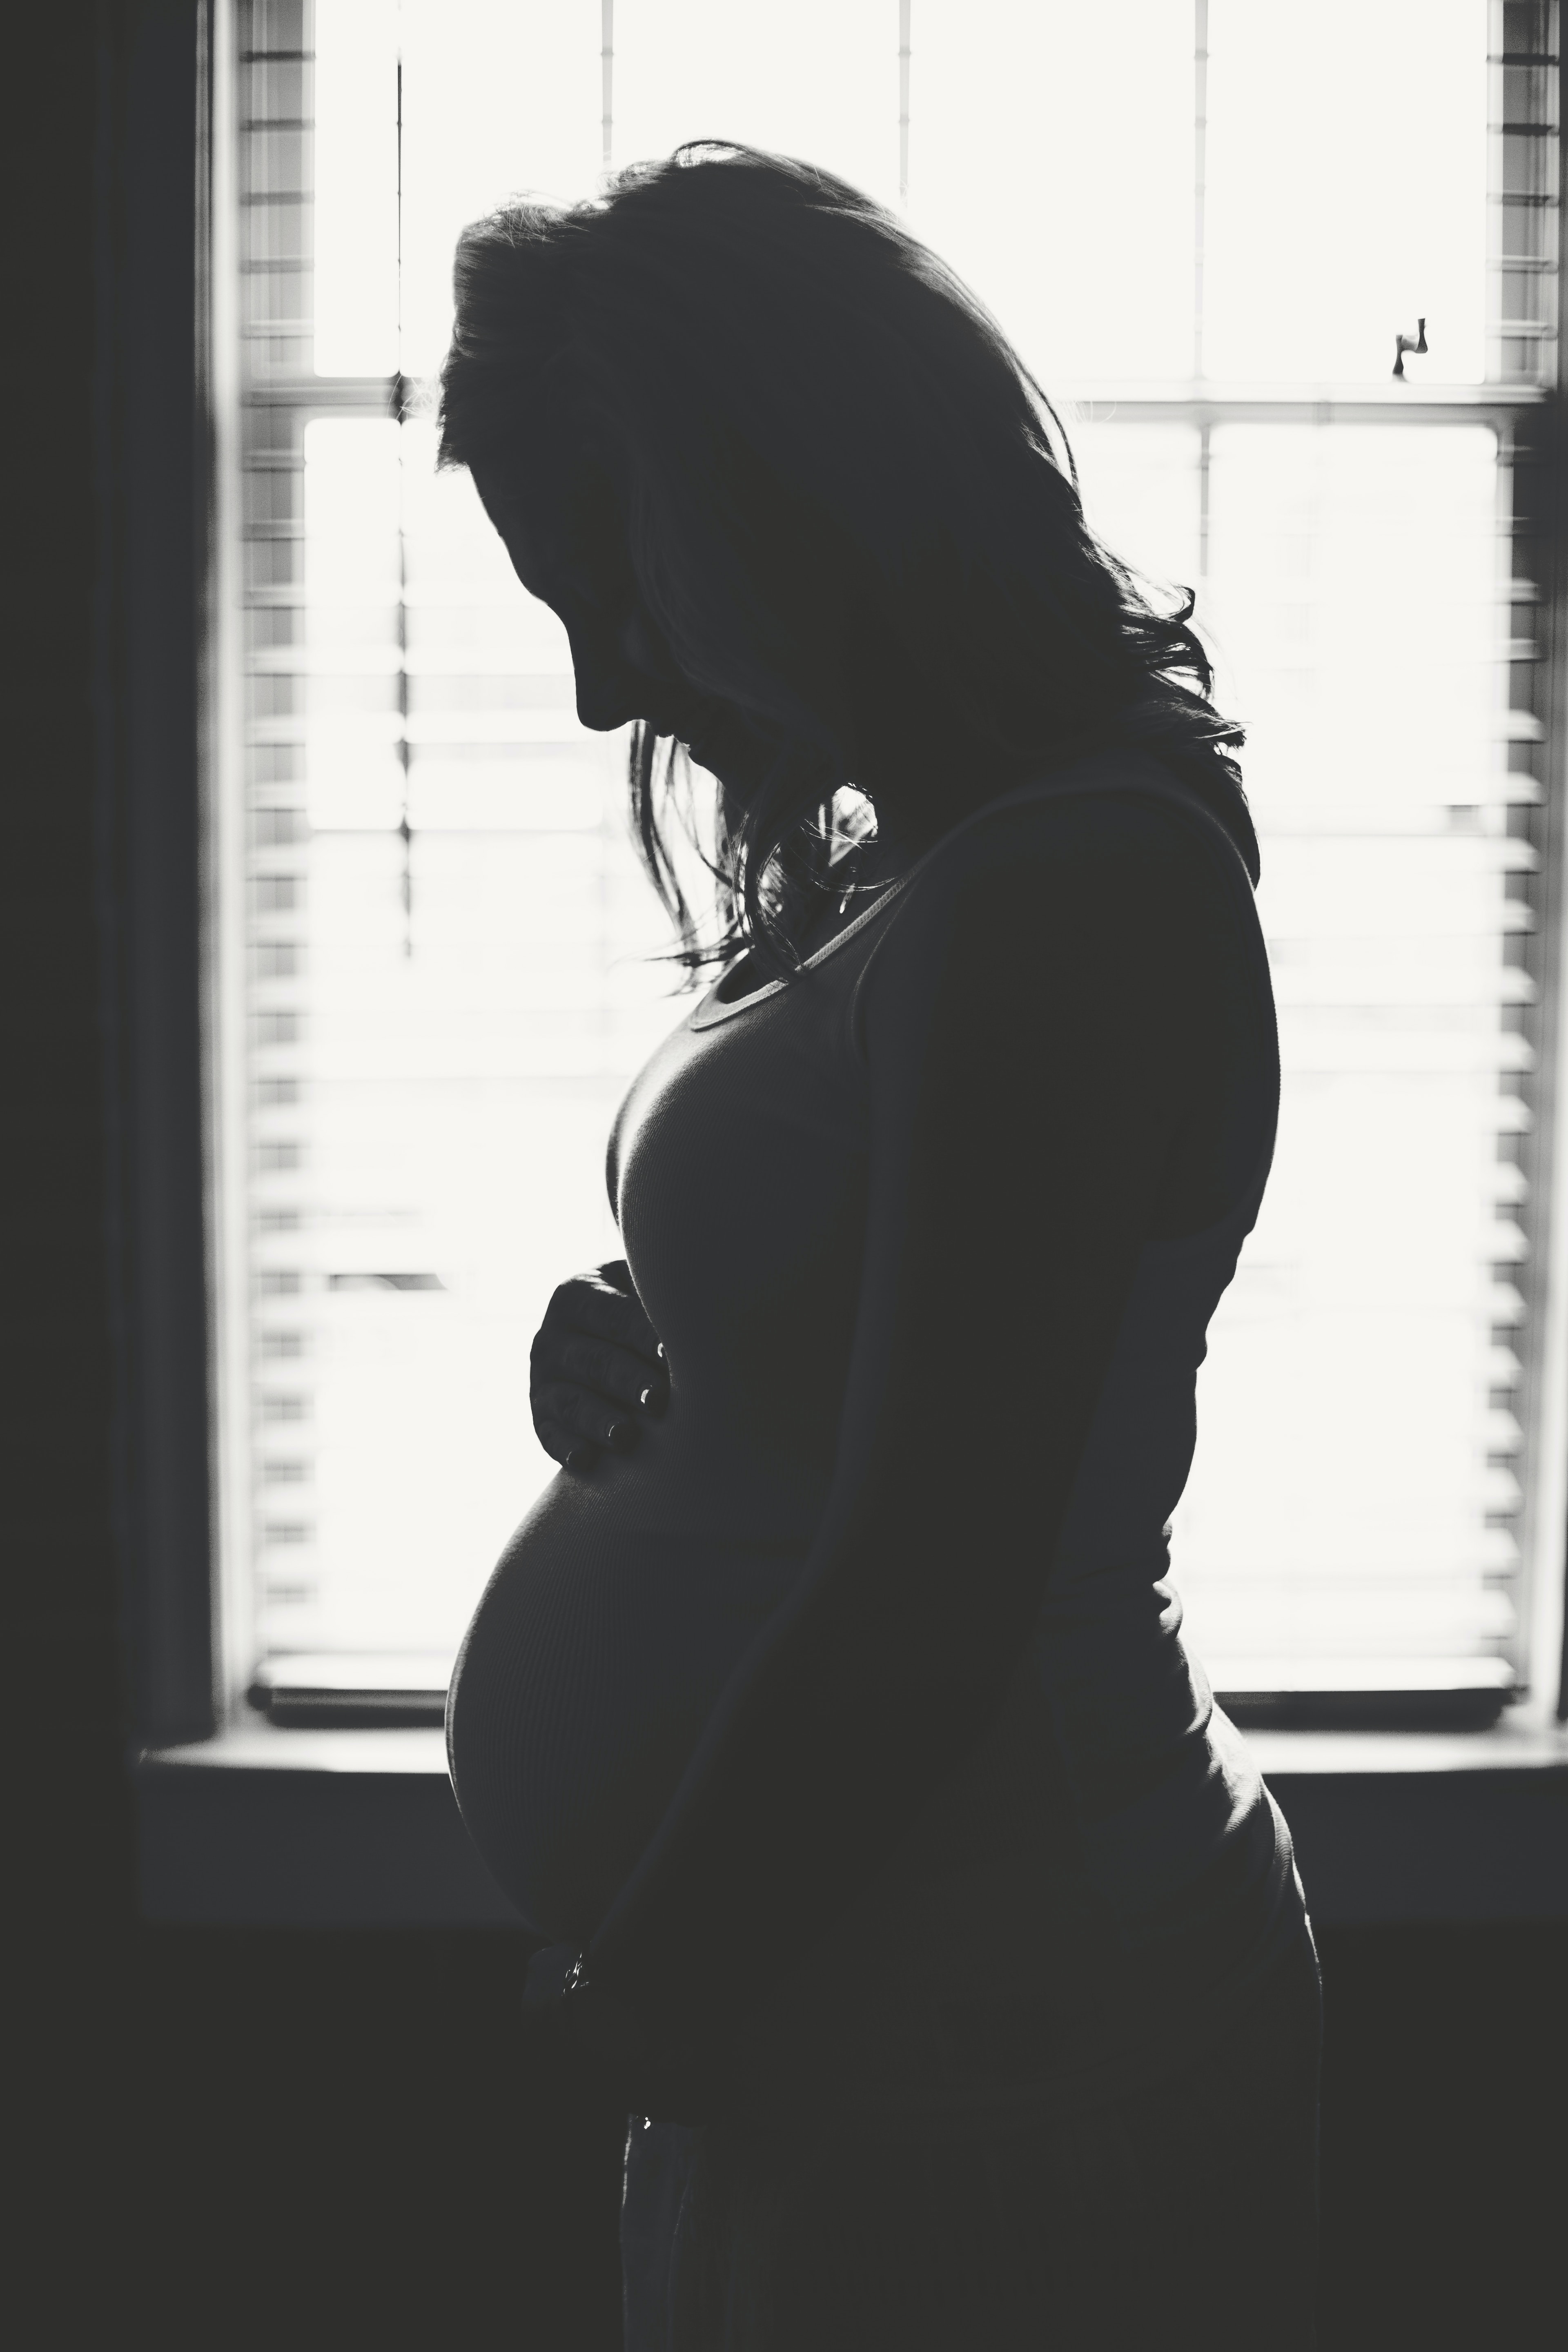 Pregnant | Source: Unsplash.com